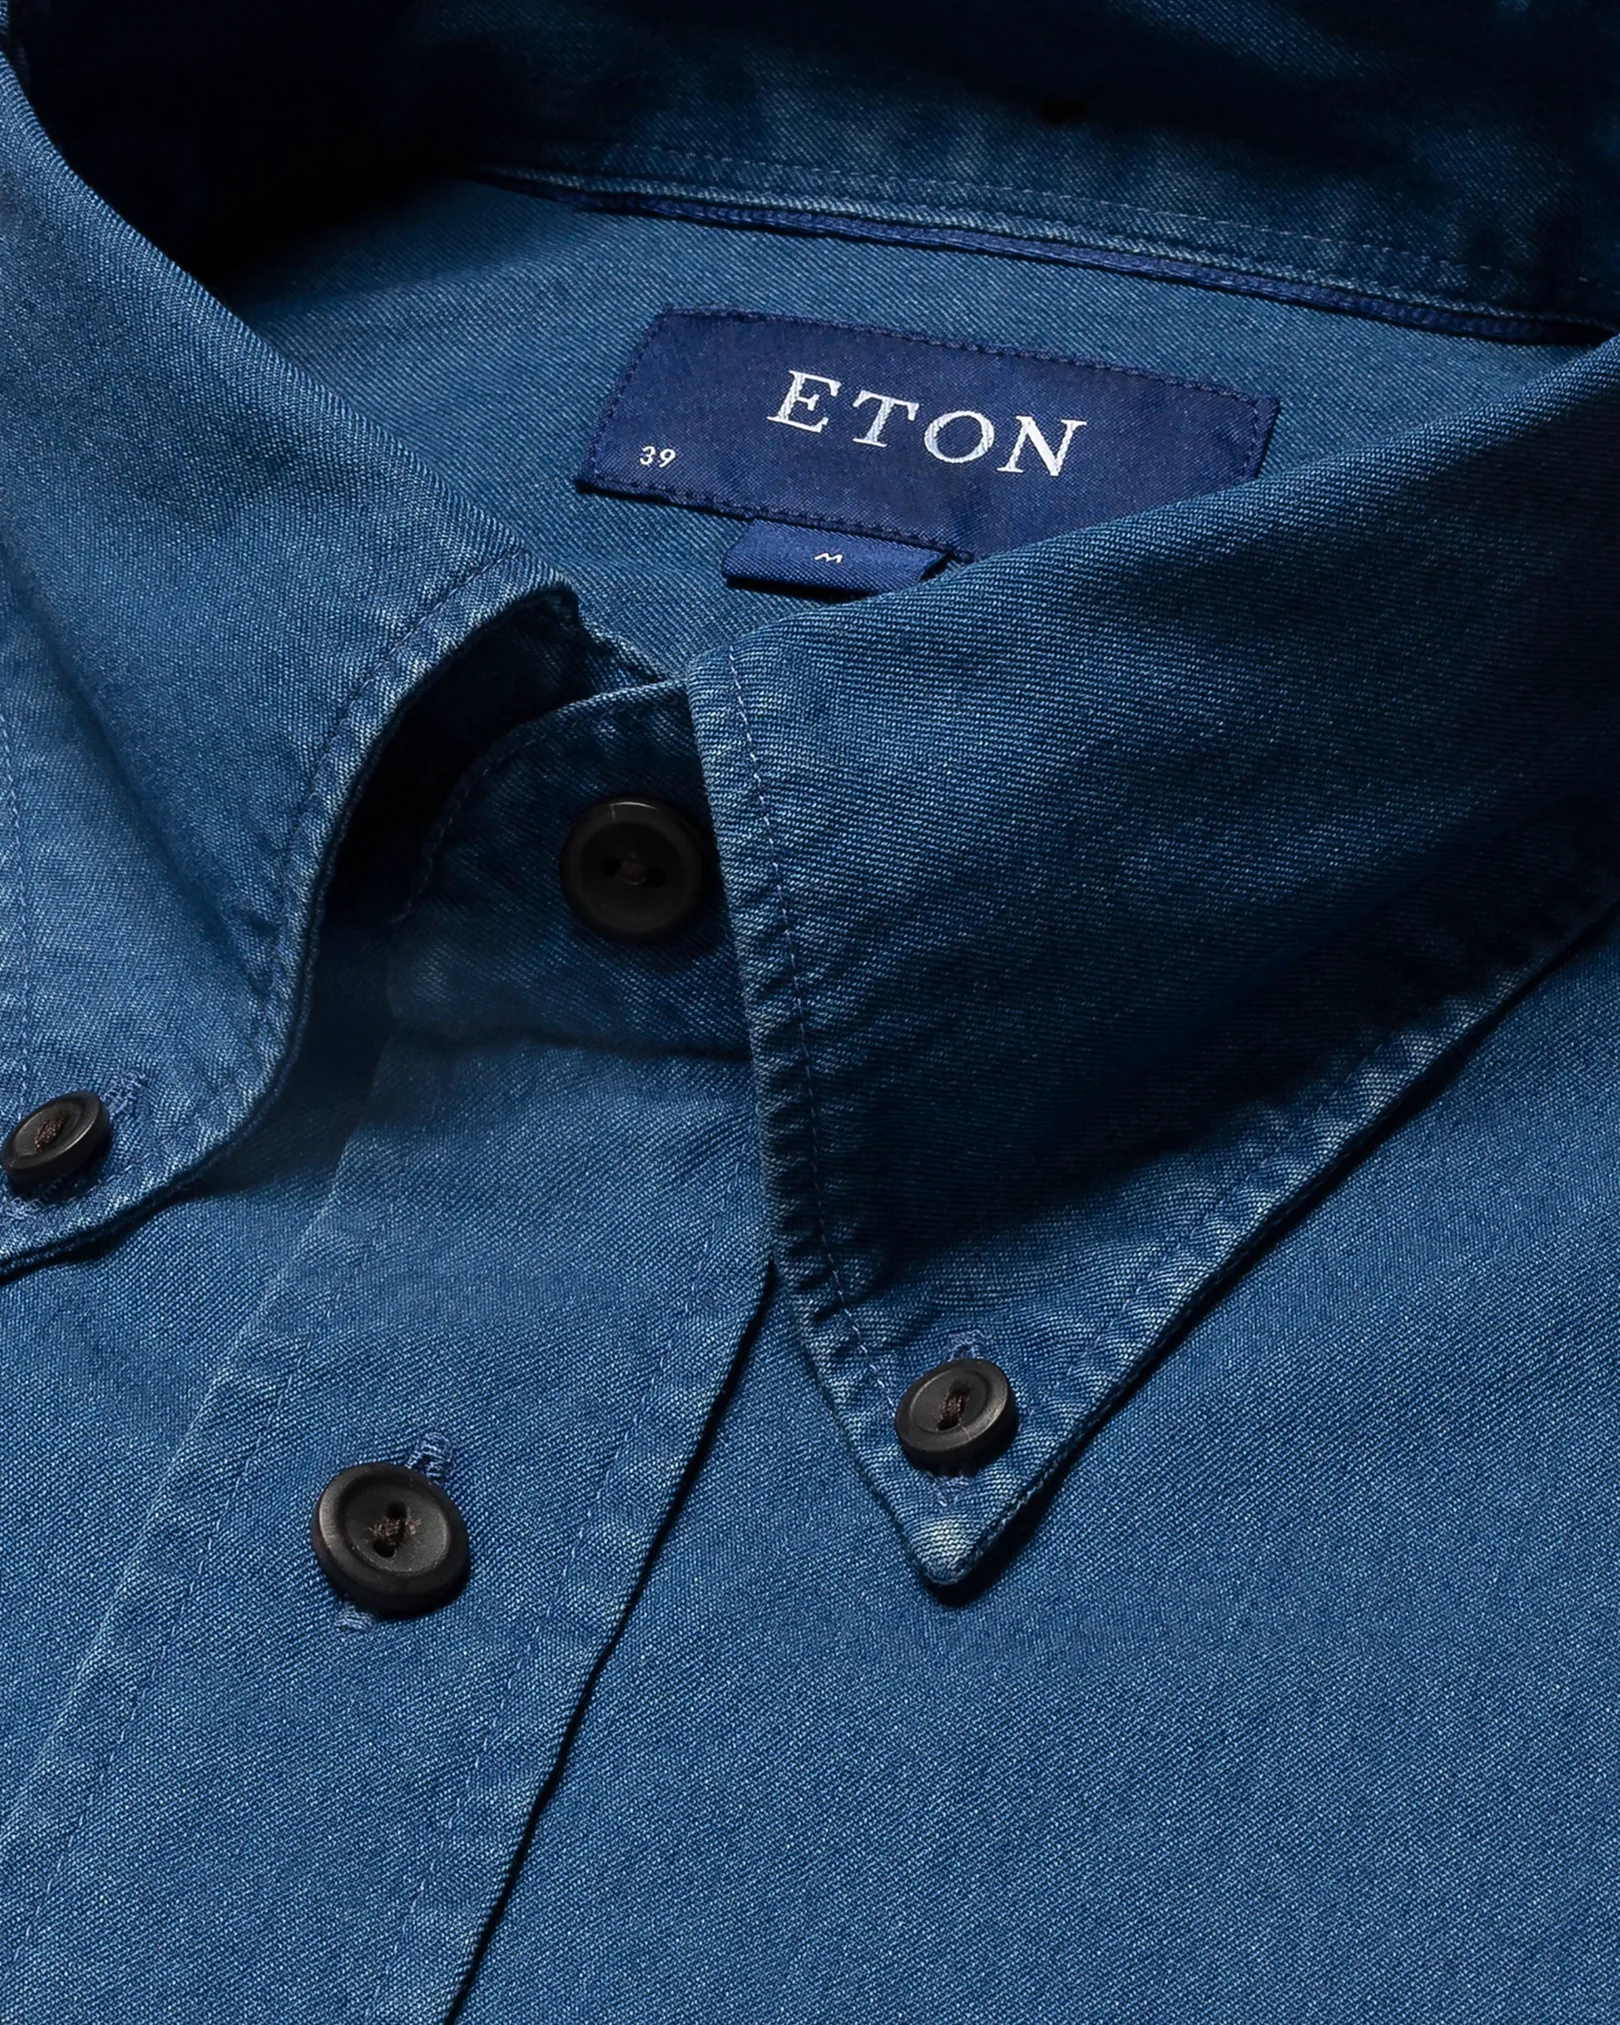 Eton - navy blue indigo button down single rounded cuff